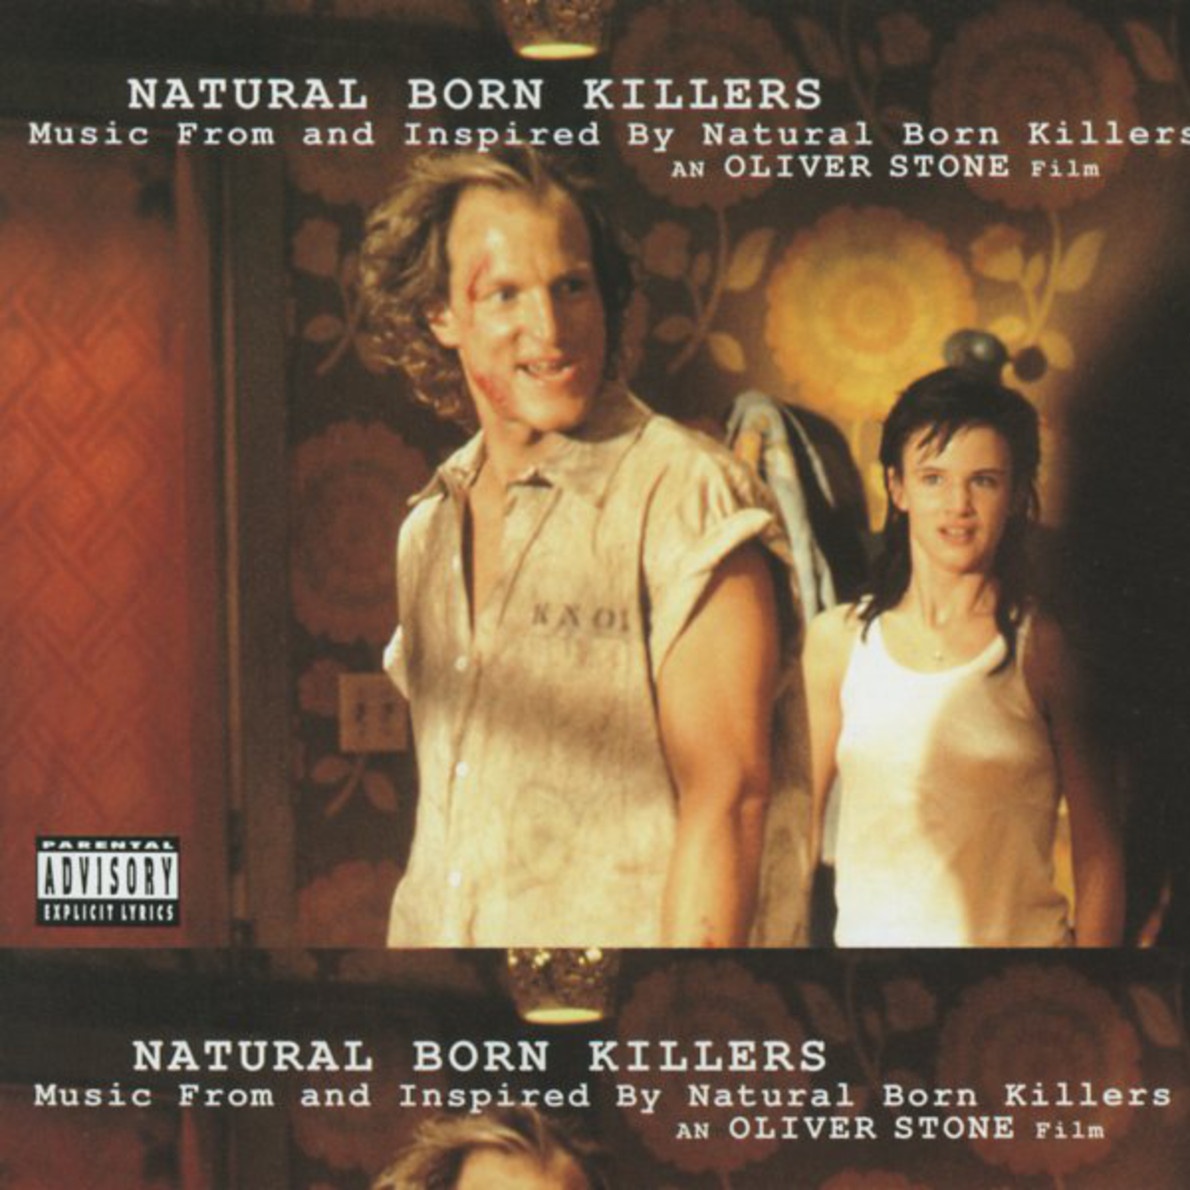 Batonga In Batongaville - From "Natural Born Killers" Soundtrack